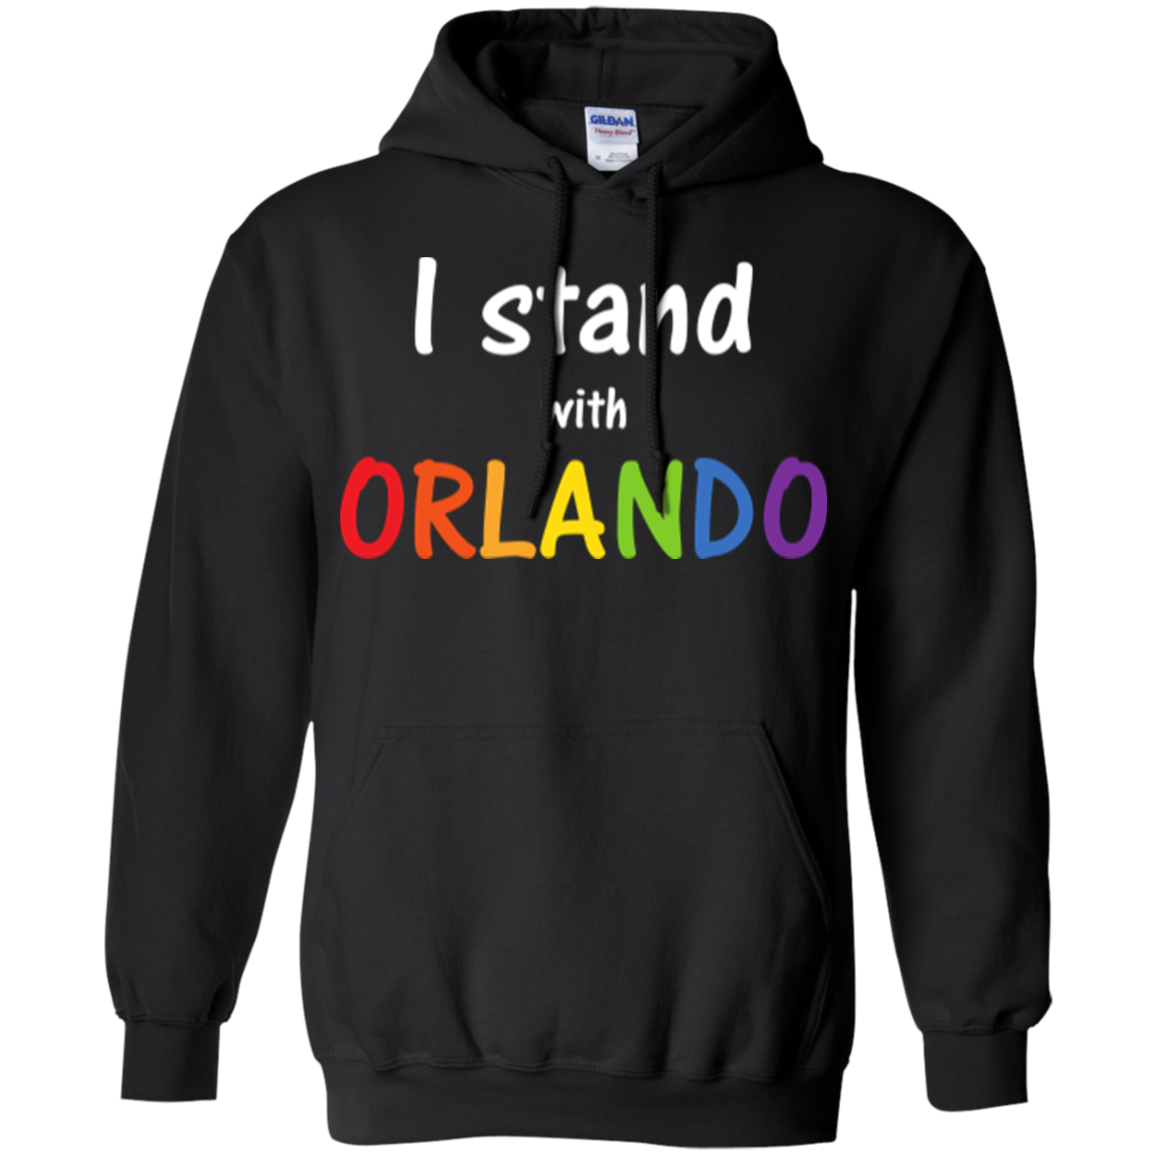 I Stand with Orlando